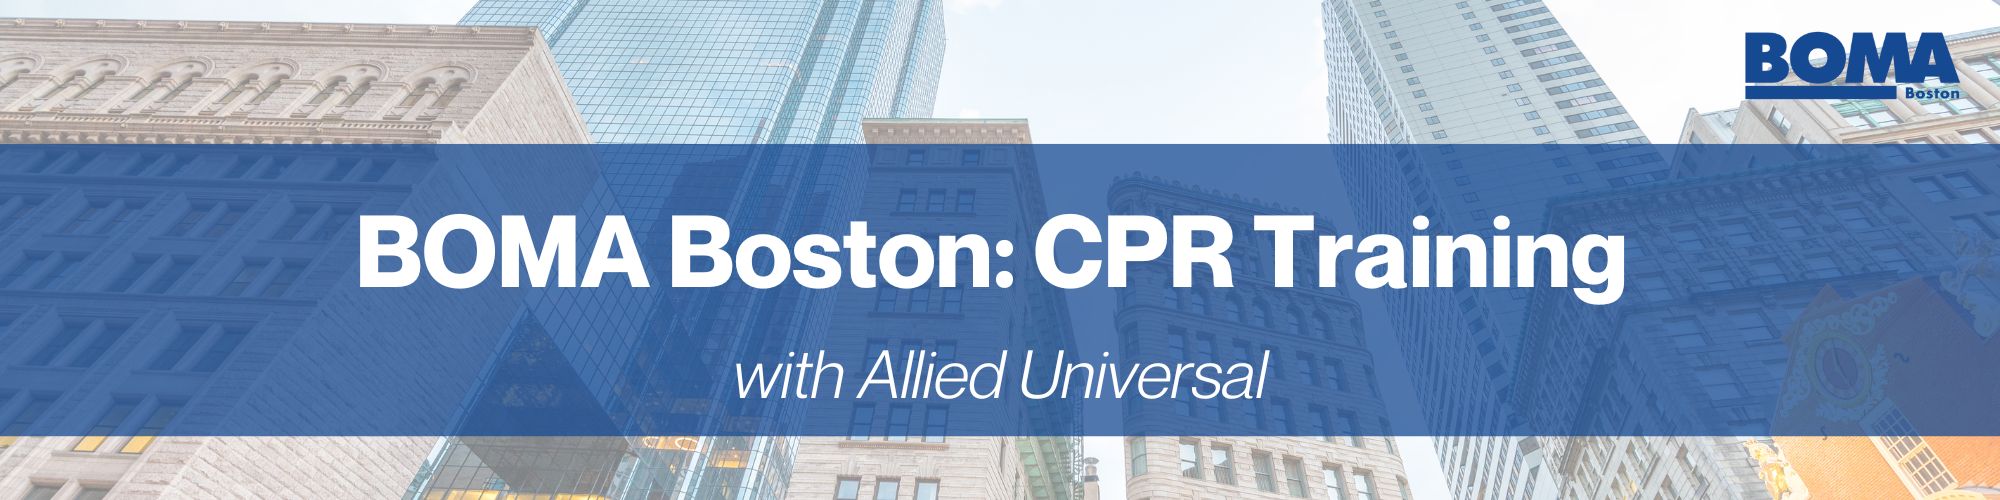 BOMA Boston CPR Training